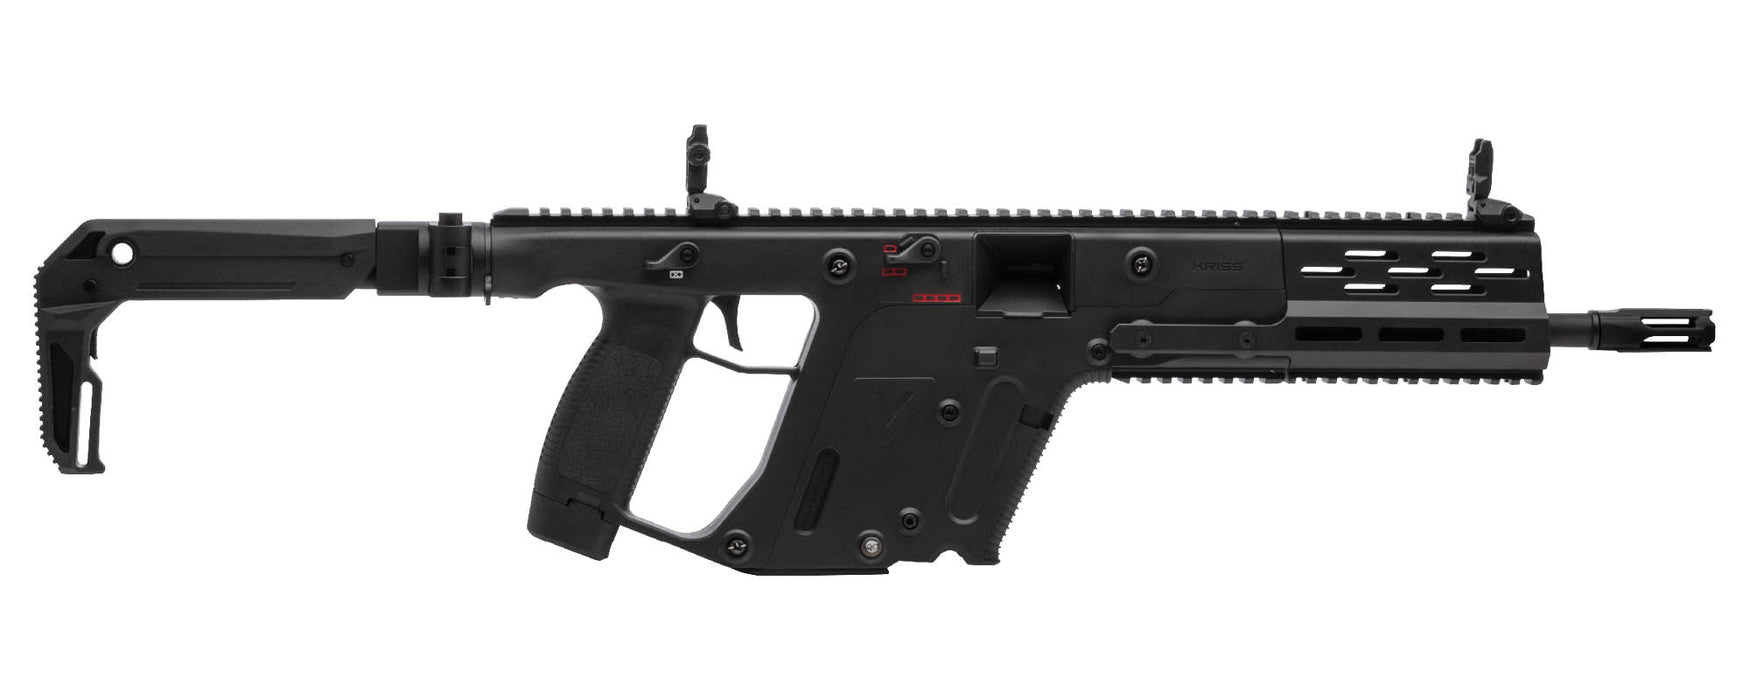 Krytac Kriss Vector Licensed Limited Edition AEG Airsoft Gun